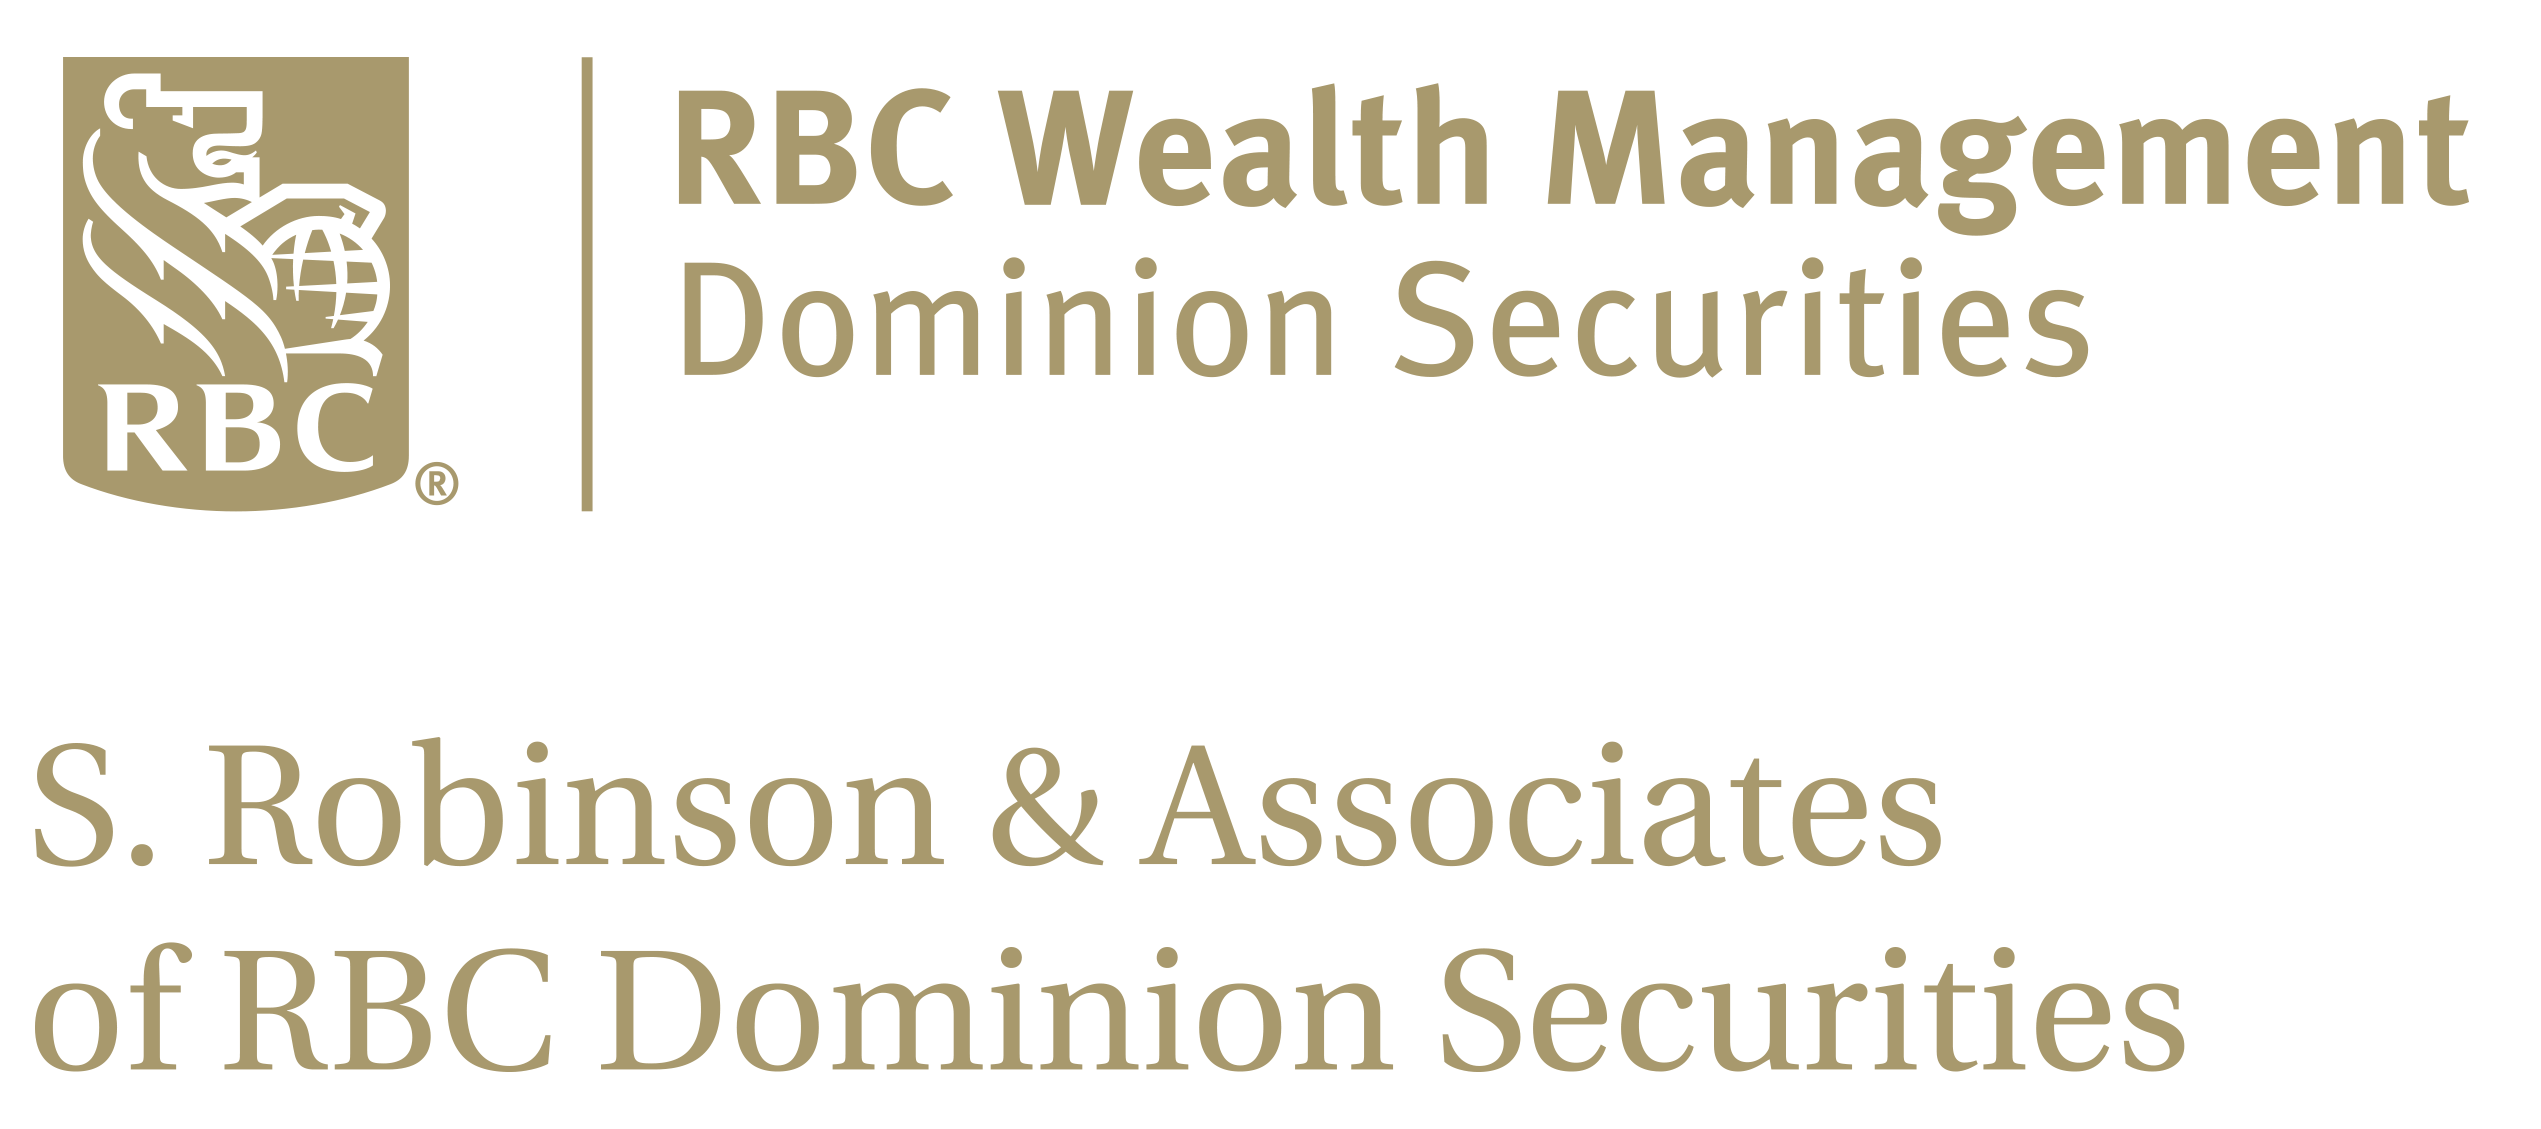 RBC Wealth Managment